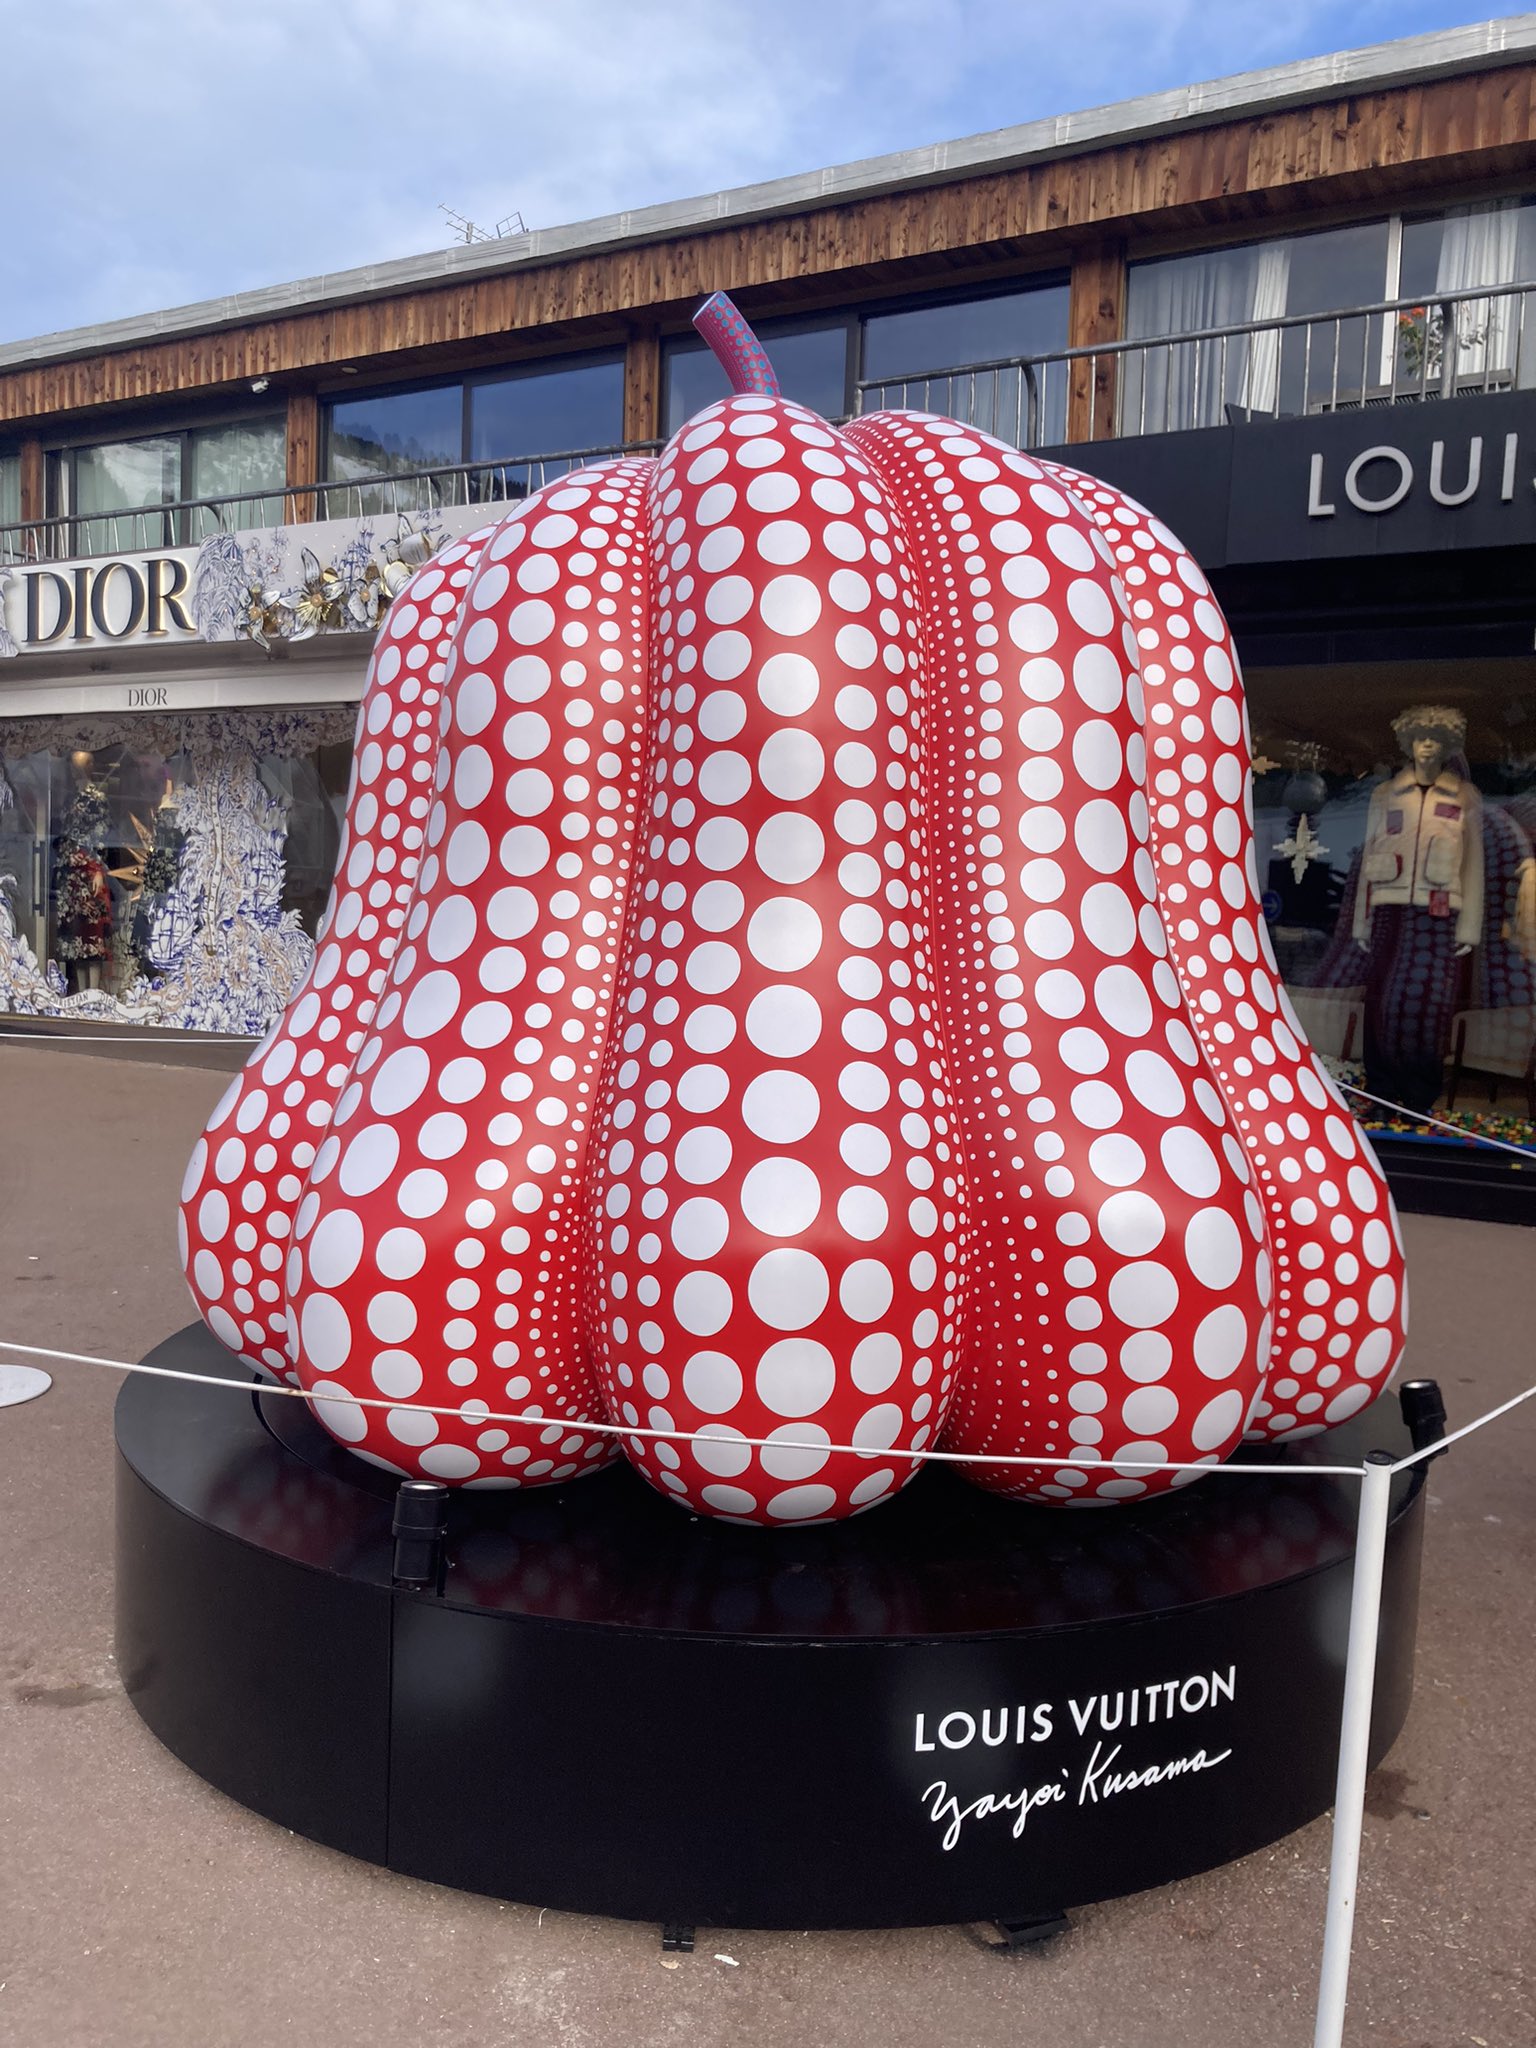 150 days of winter on X: Giant pumpkins #yayoikusama #louisvuitton #lvmh # courchevel  / X